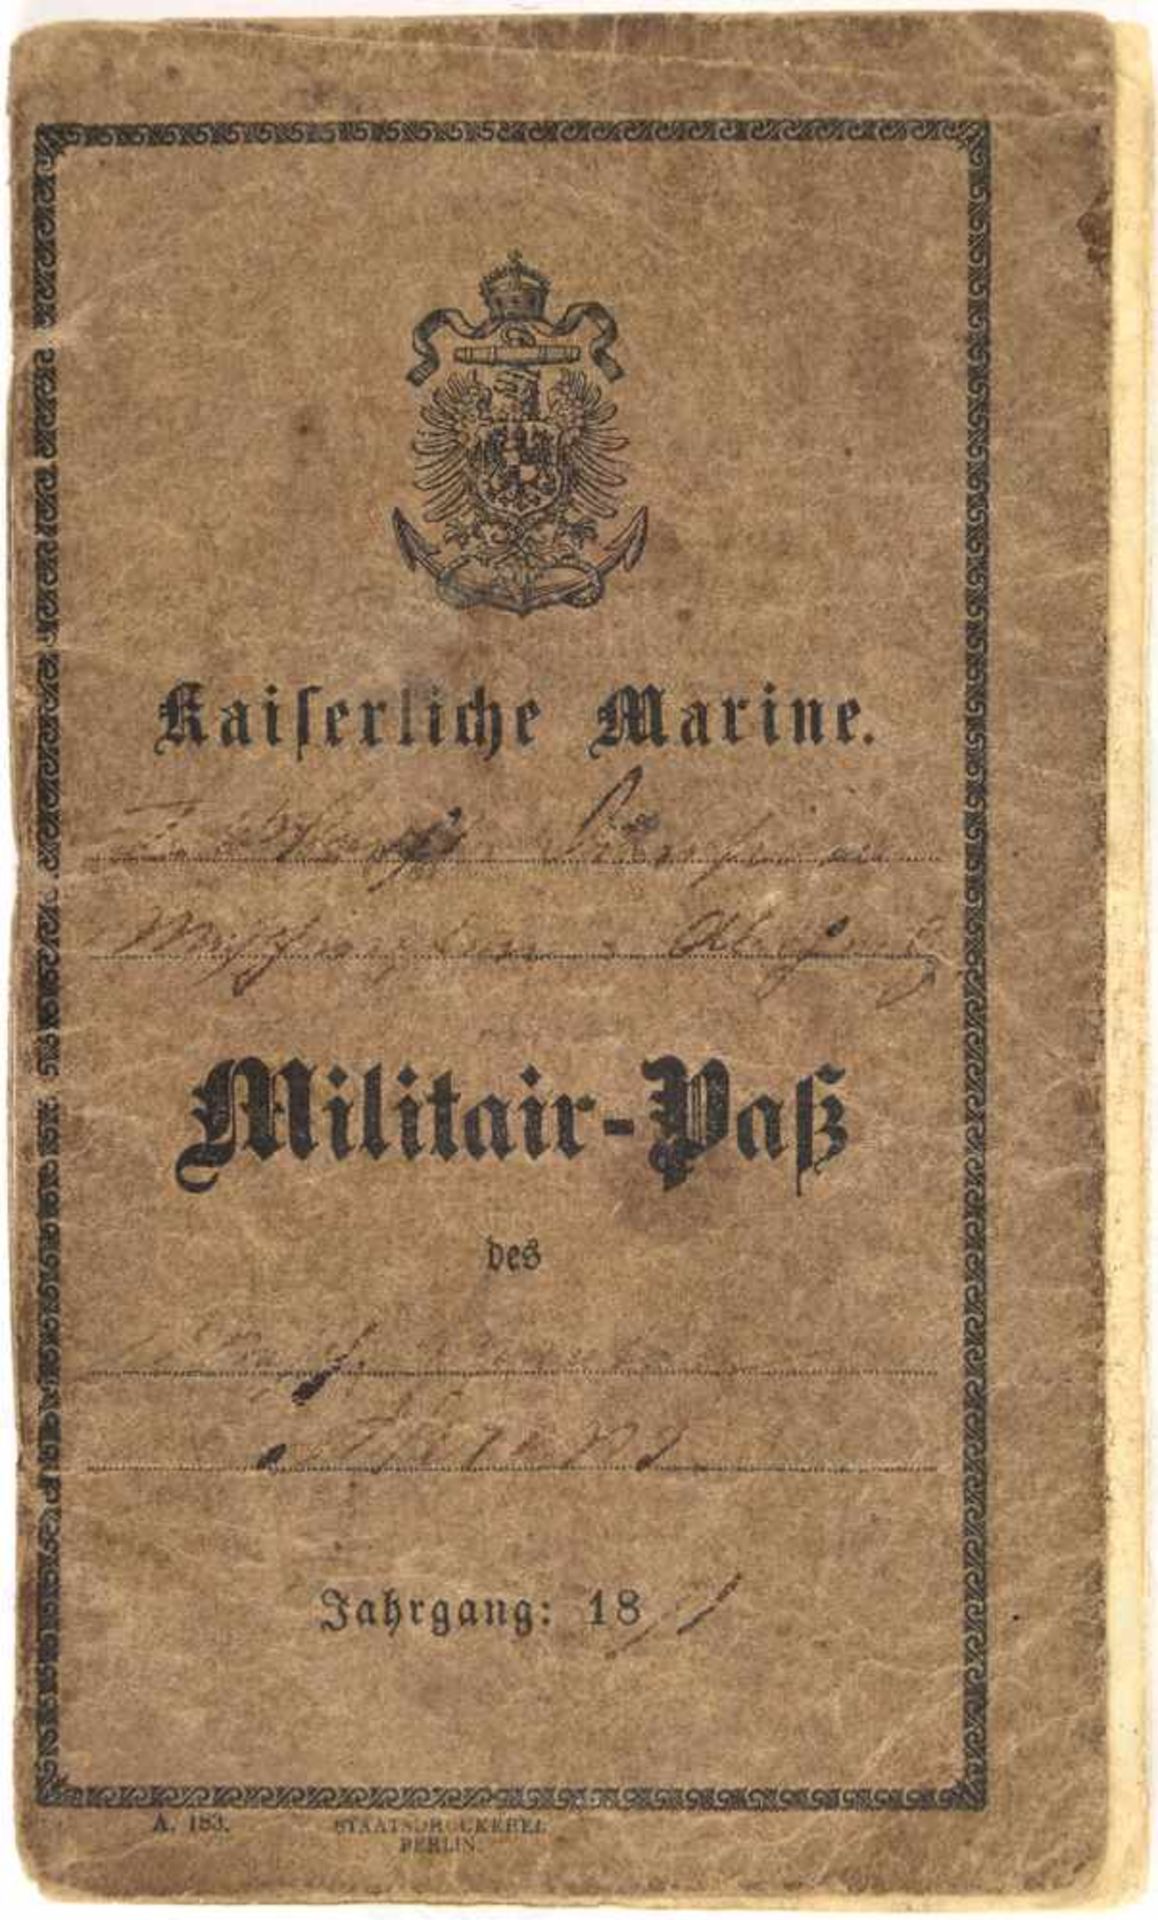 MILITAIR-PAß EINES MASCHINEN-MAATEN, Eintritt am 17. Mai 1871 bei der Maschinisten-Abteilung d. I.